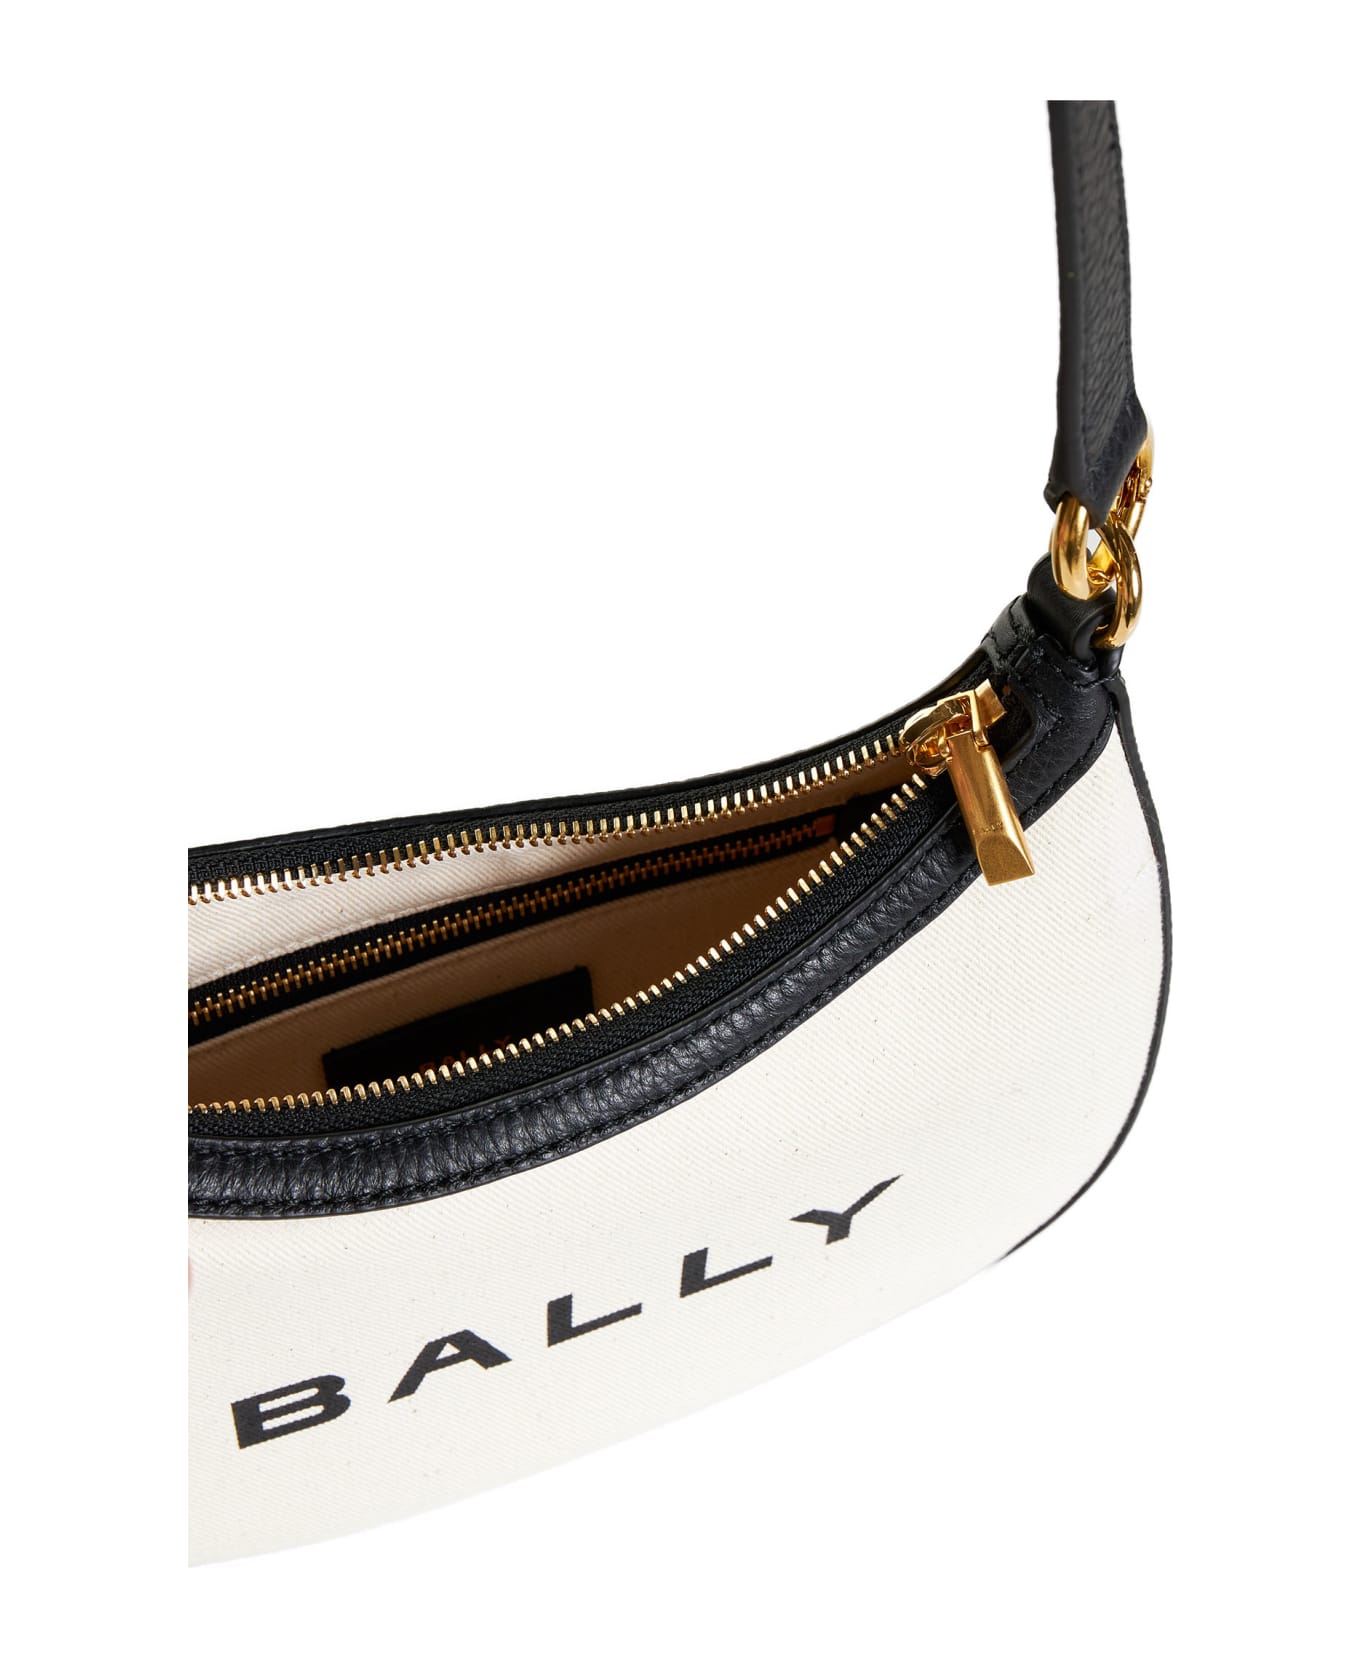 Bally Shoulder Bag - Natural/black+oro